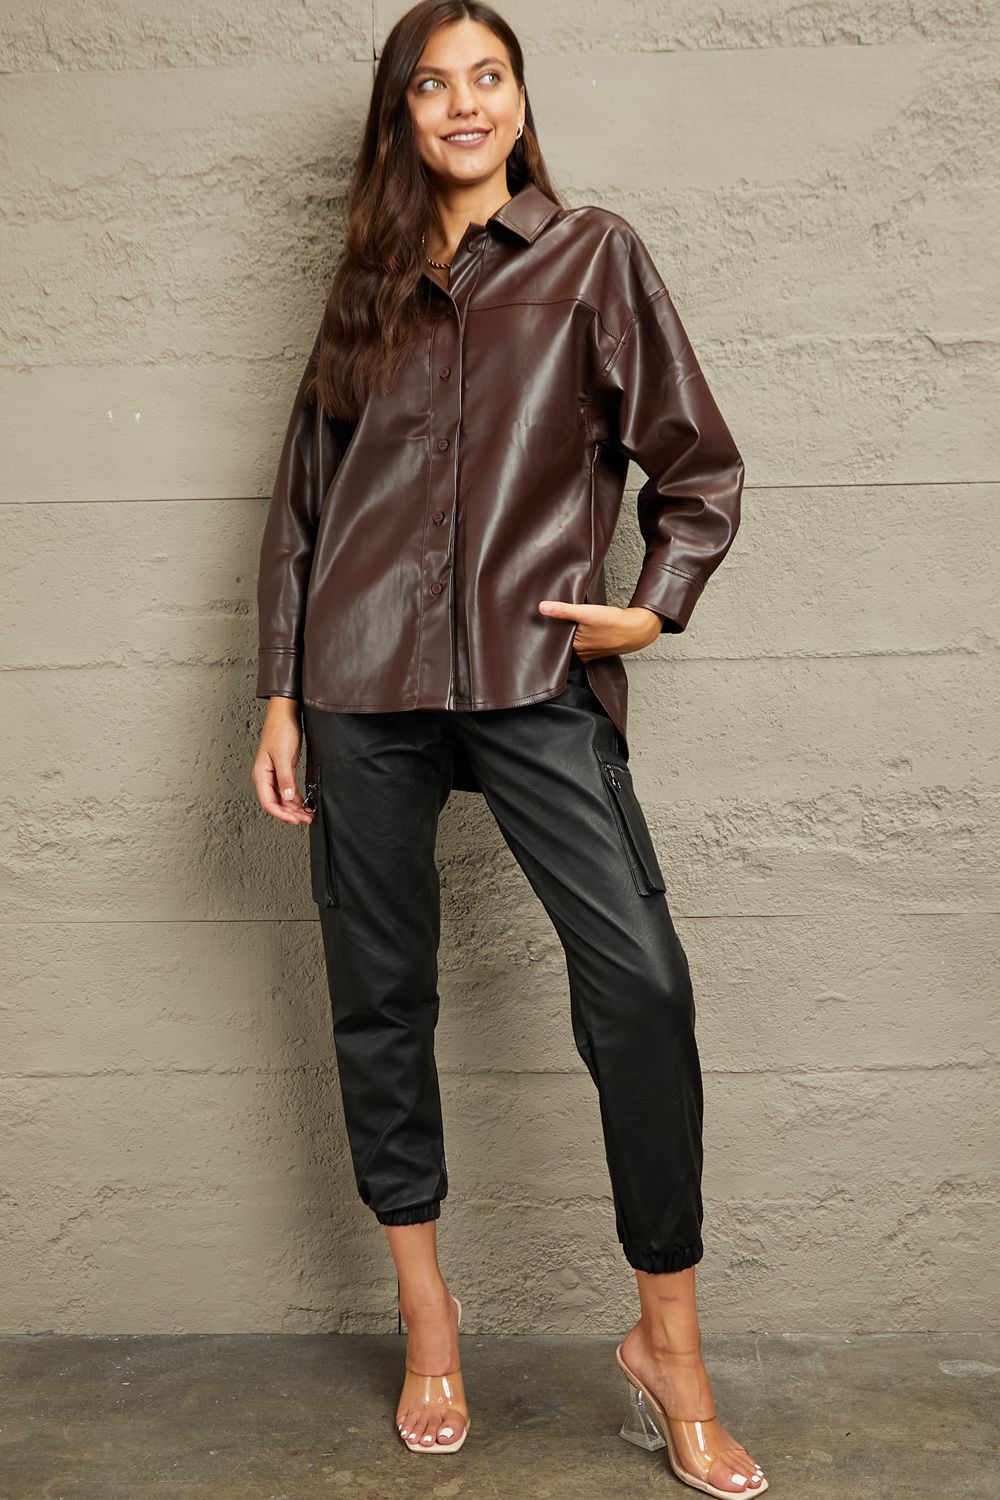 Rosy Brown e.Luna Vegan Leather Button Down Shirt Sentient Beauty Fashions Apparel &amp; Accessories